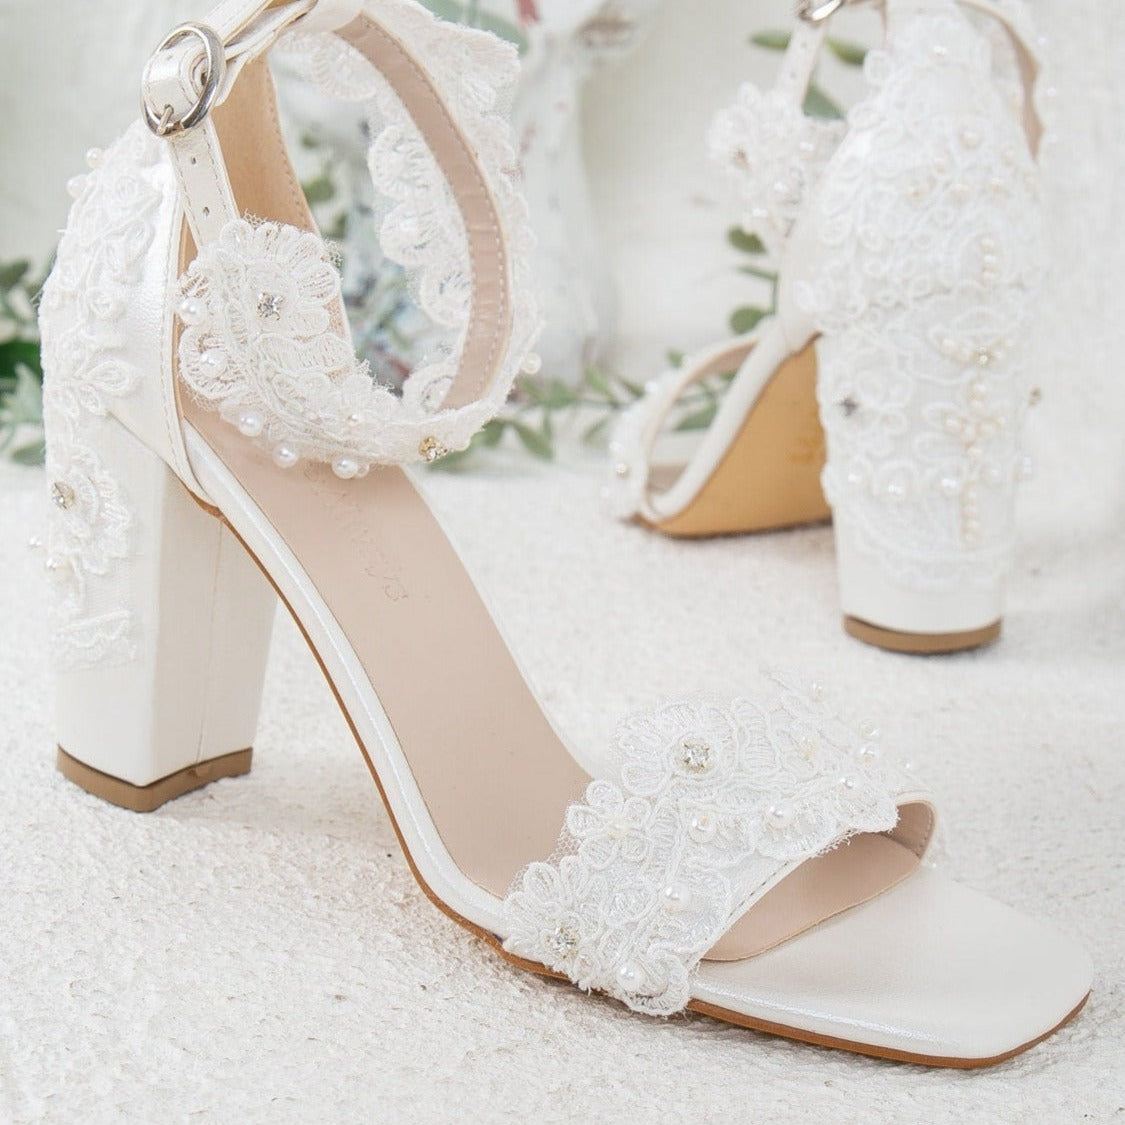 Ivory Wedding Shoes/ Block Heel Wedding Shoes/ Bridal Heels/ Wedding Heels/pearl  Heels/ Bridal Shoes/ Pointed Toe Heels/ Pearl Wedding Shoes - Etsy | Wedding  shoes heels, Ivory wedding shoes, Wedding shoes block